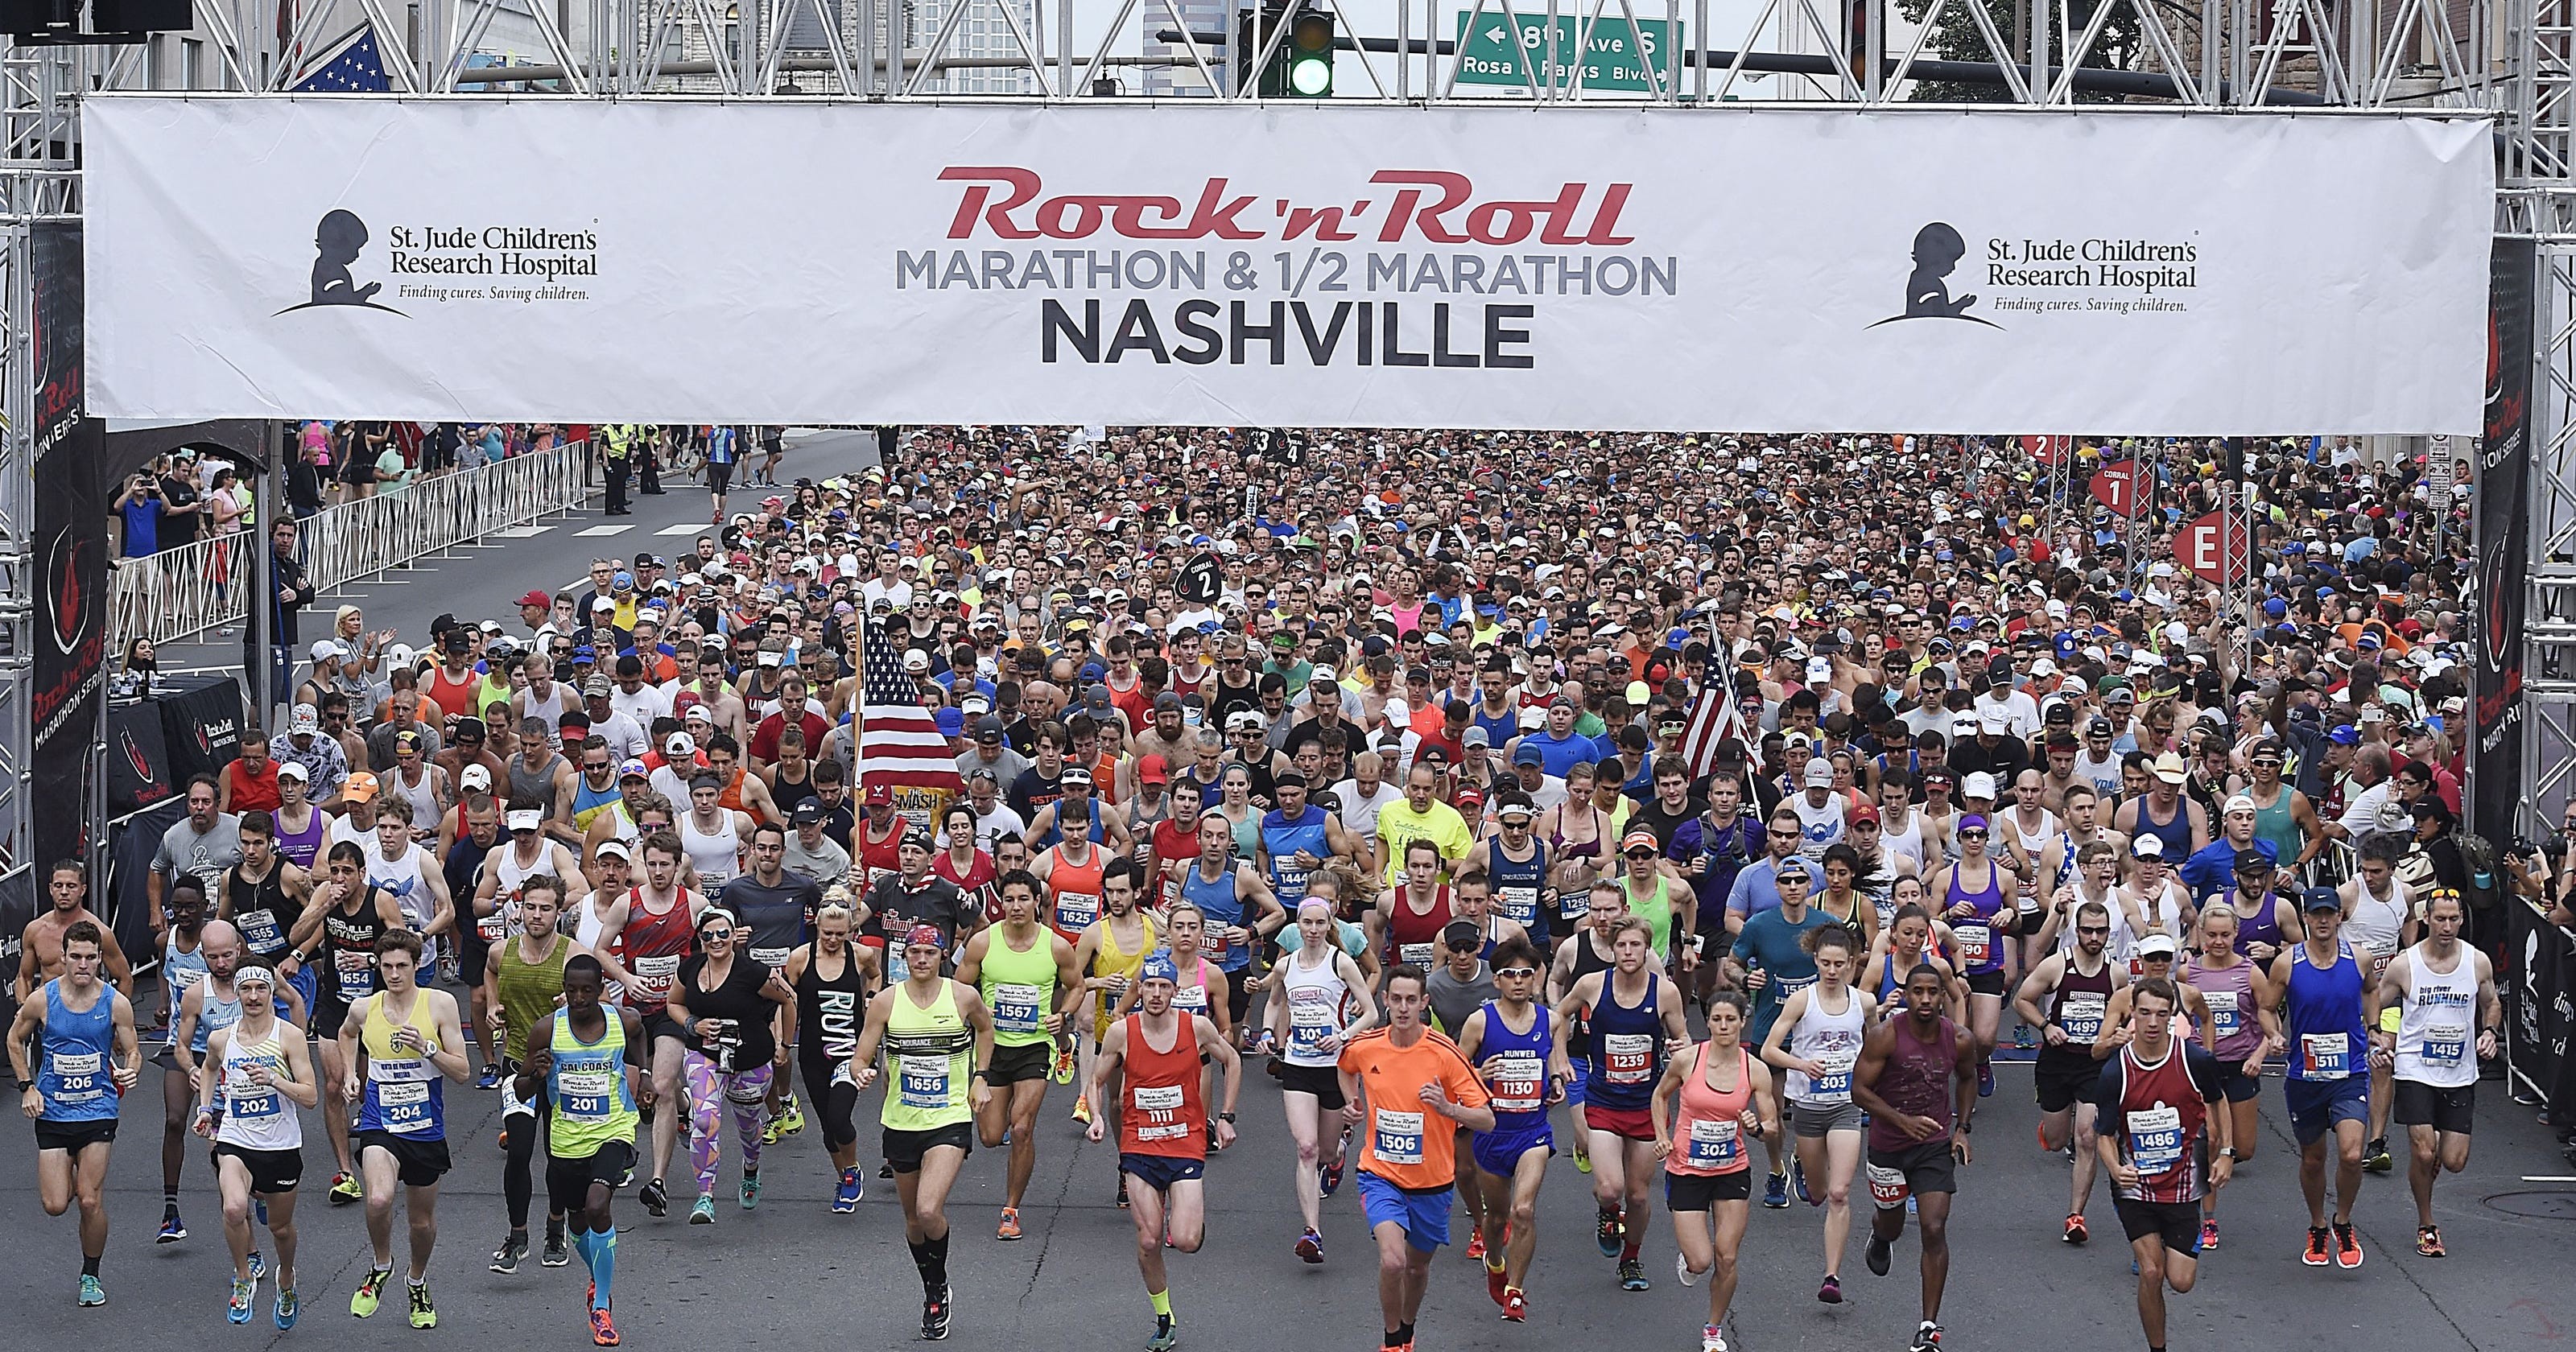 2021 Rock ‘n’ Roll Nashville Marathon has been postponed again